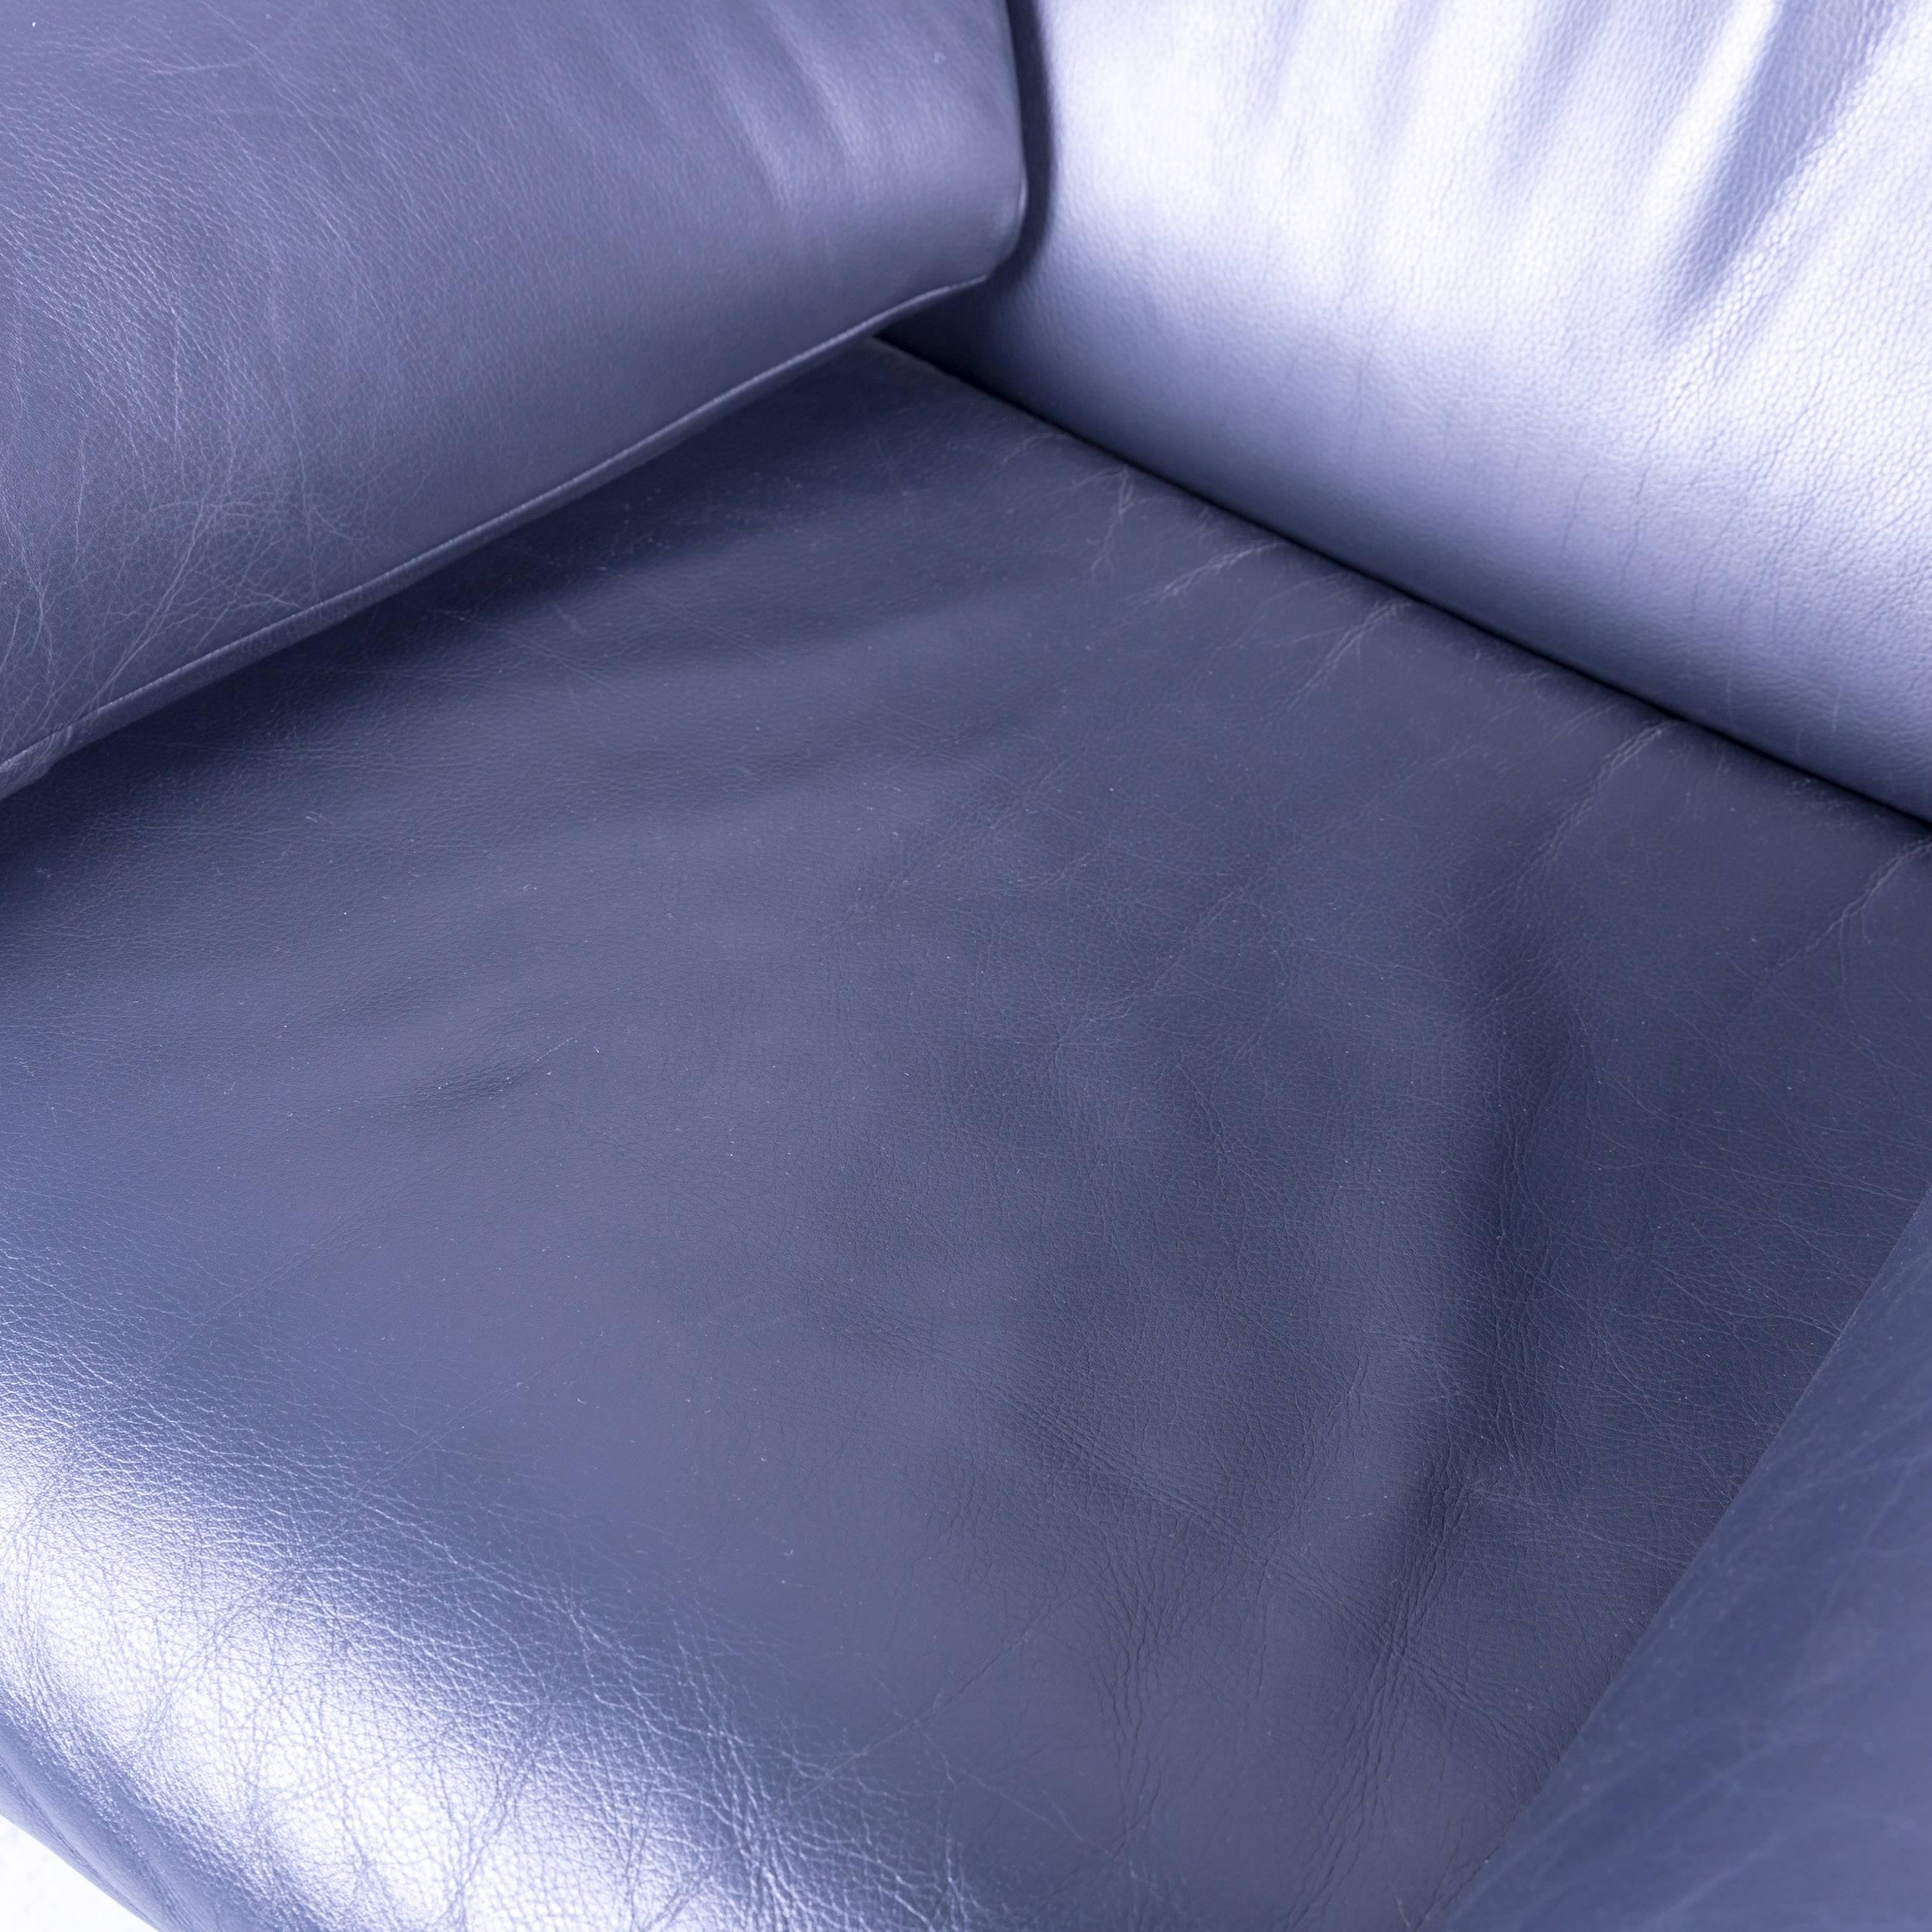 de Sede DS 10 Designer Leather Armchair Dark Navy Blue One-Seat from Switzerland 2